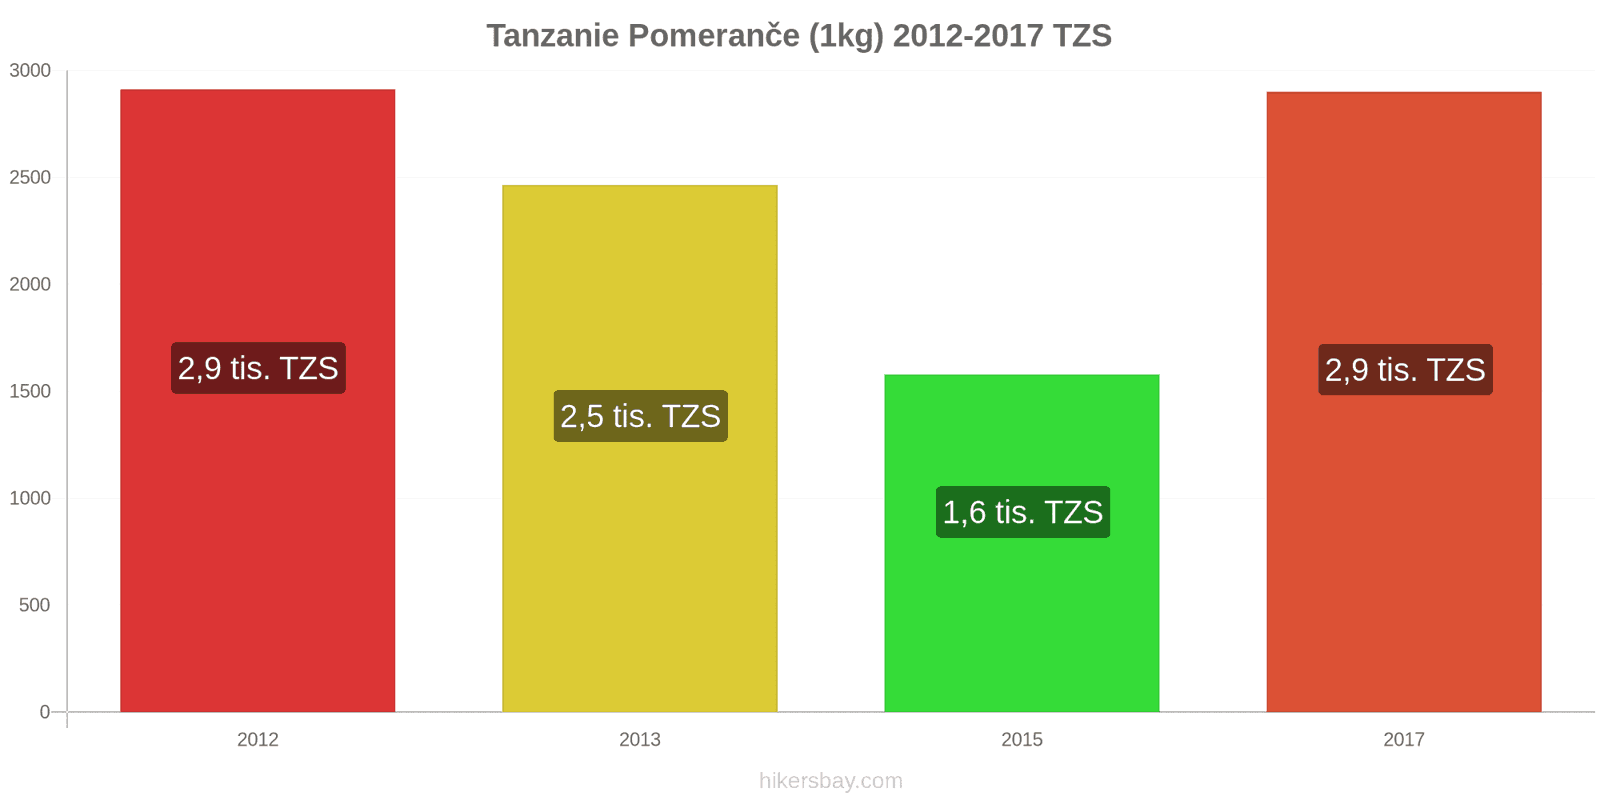 Tanzanie změny cen Pomeranče (1kg) hikersbay.com